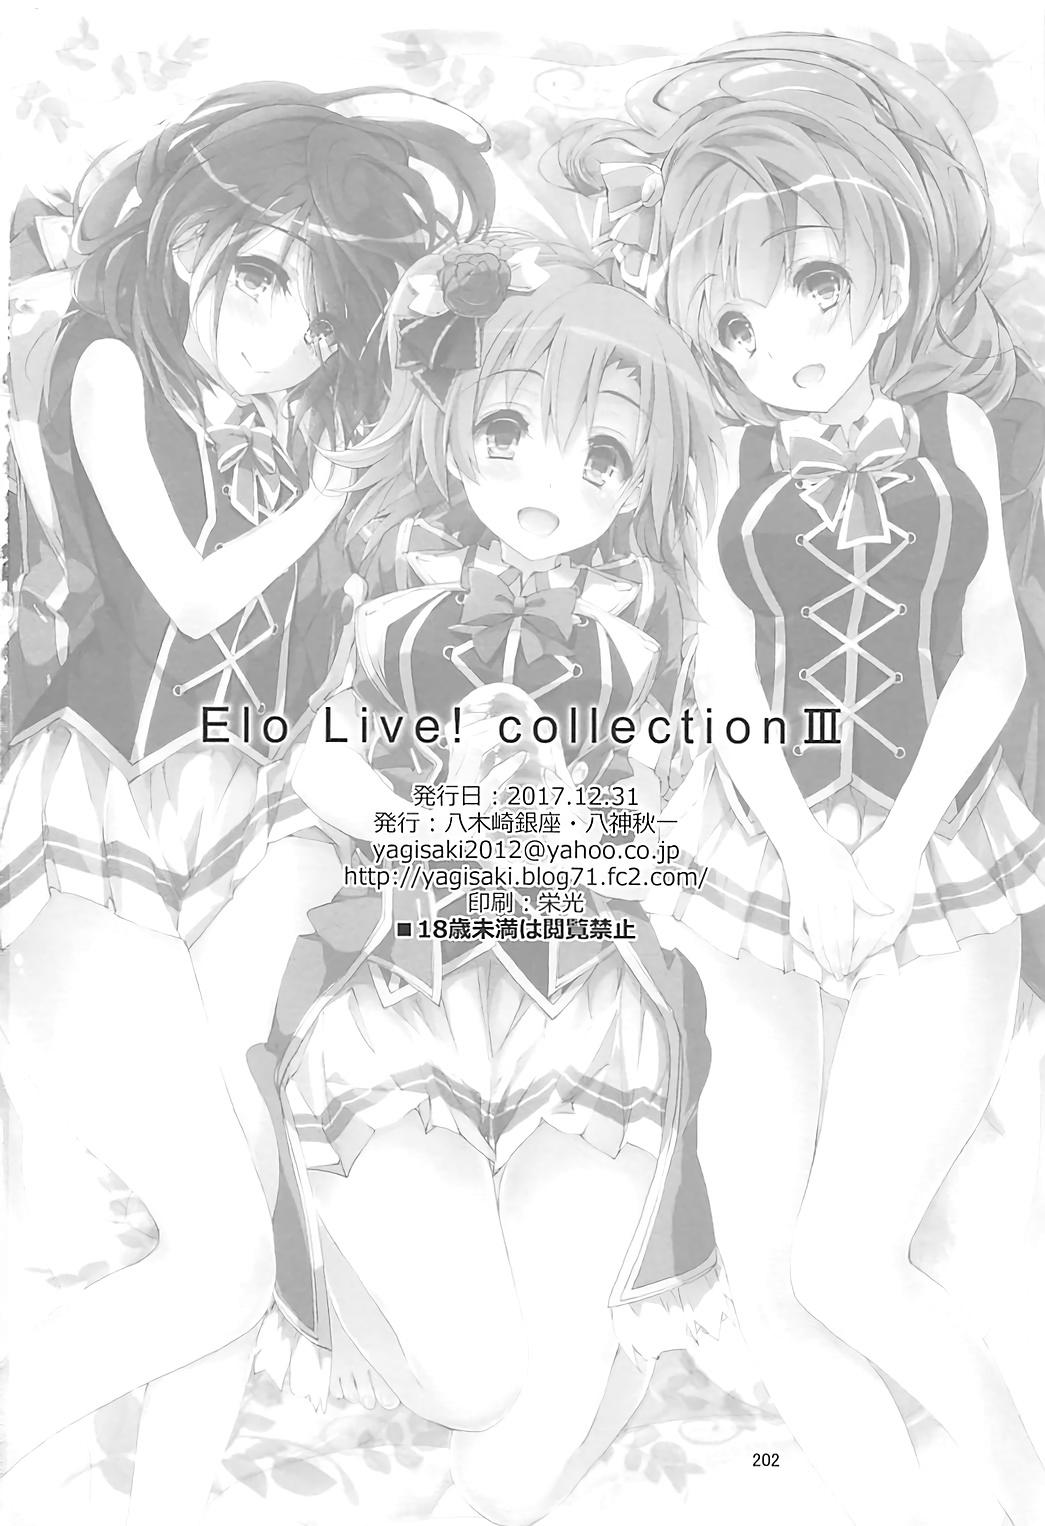 Elo Live! collection III 200